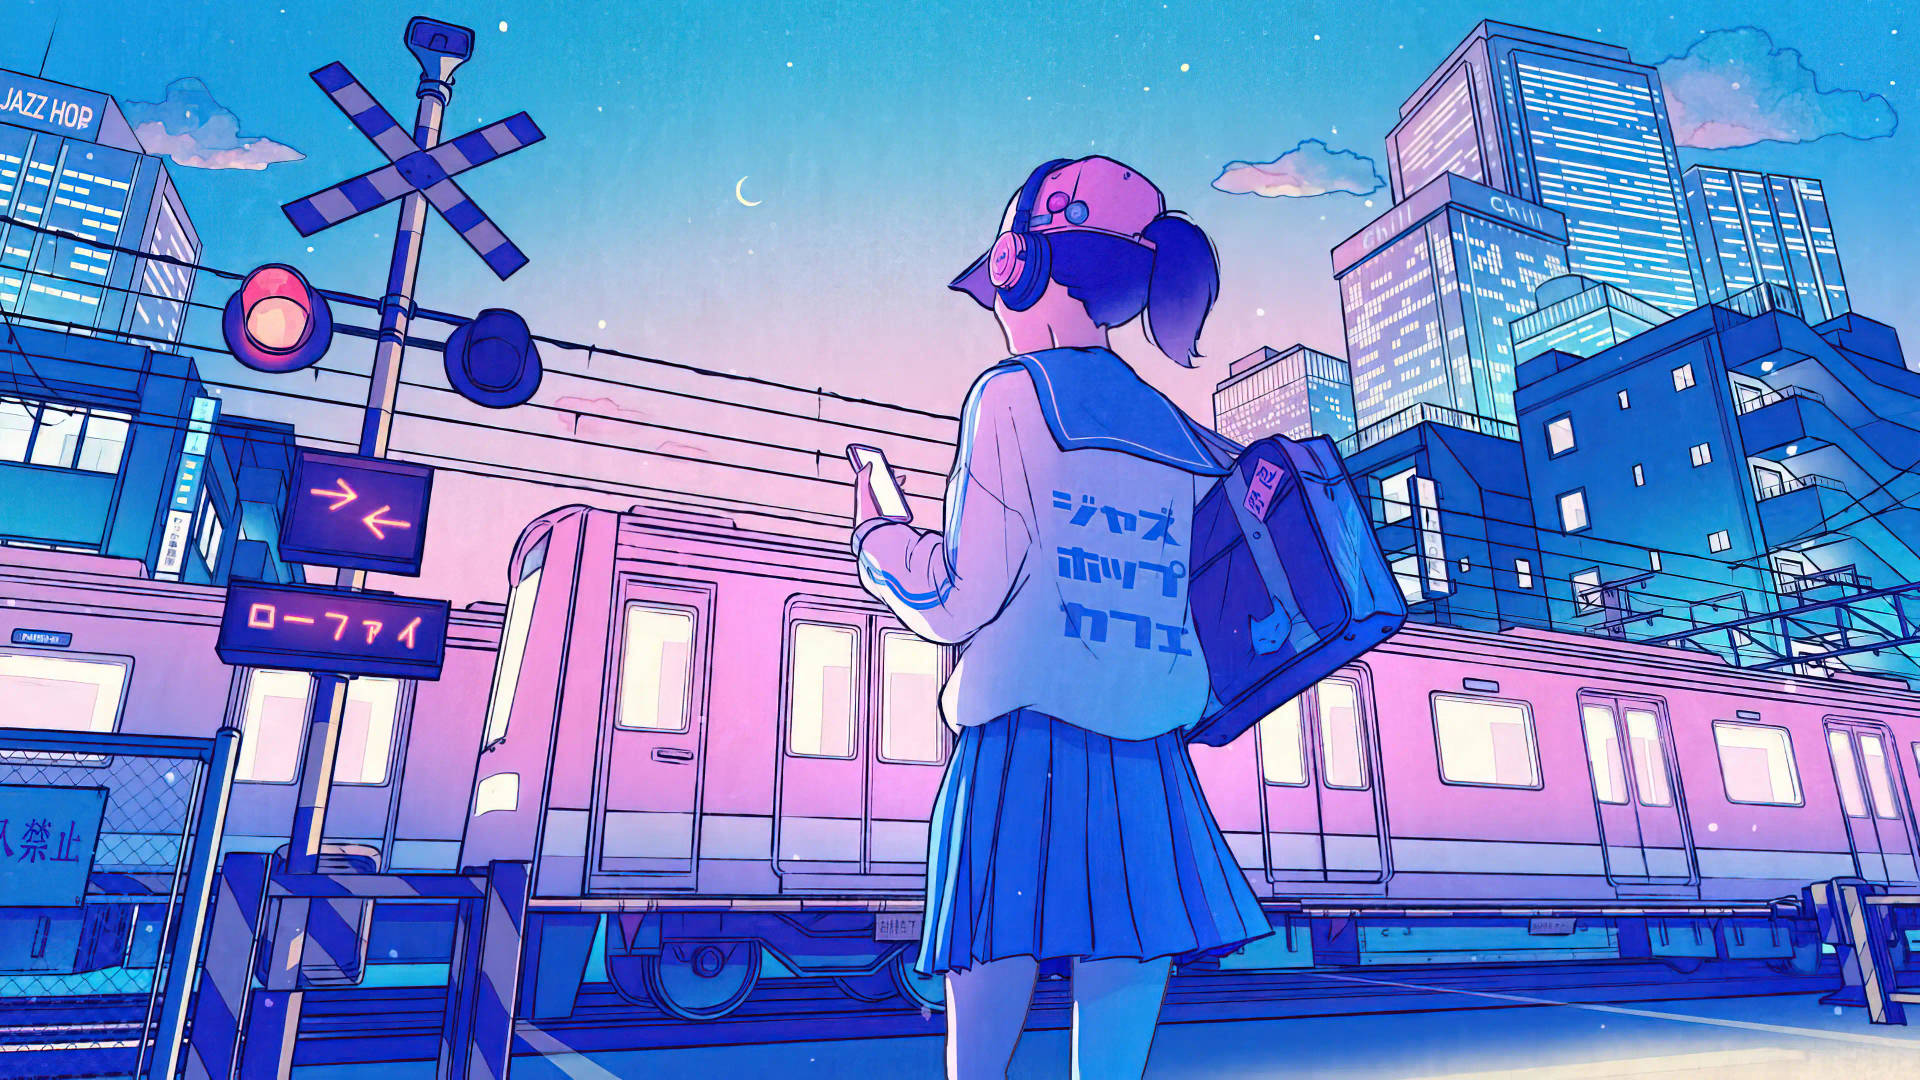 Neon Aesthetic Anime City Wallpaper